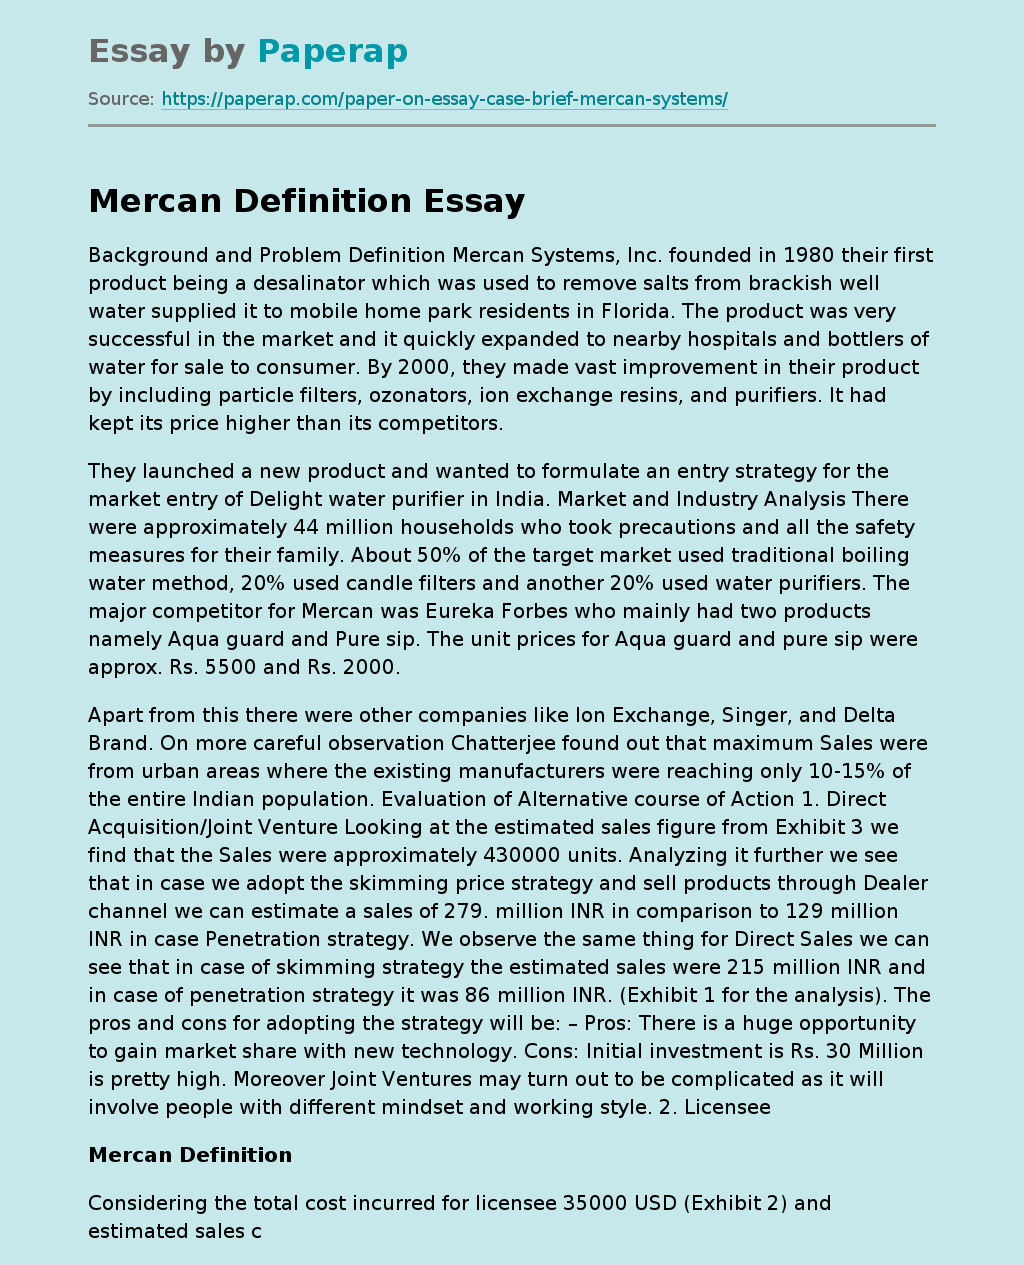 Mercan Definition